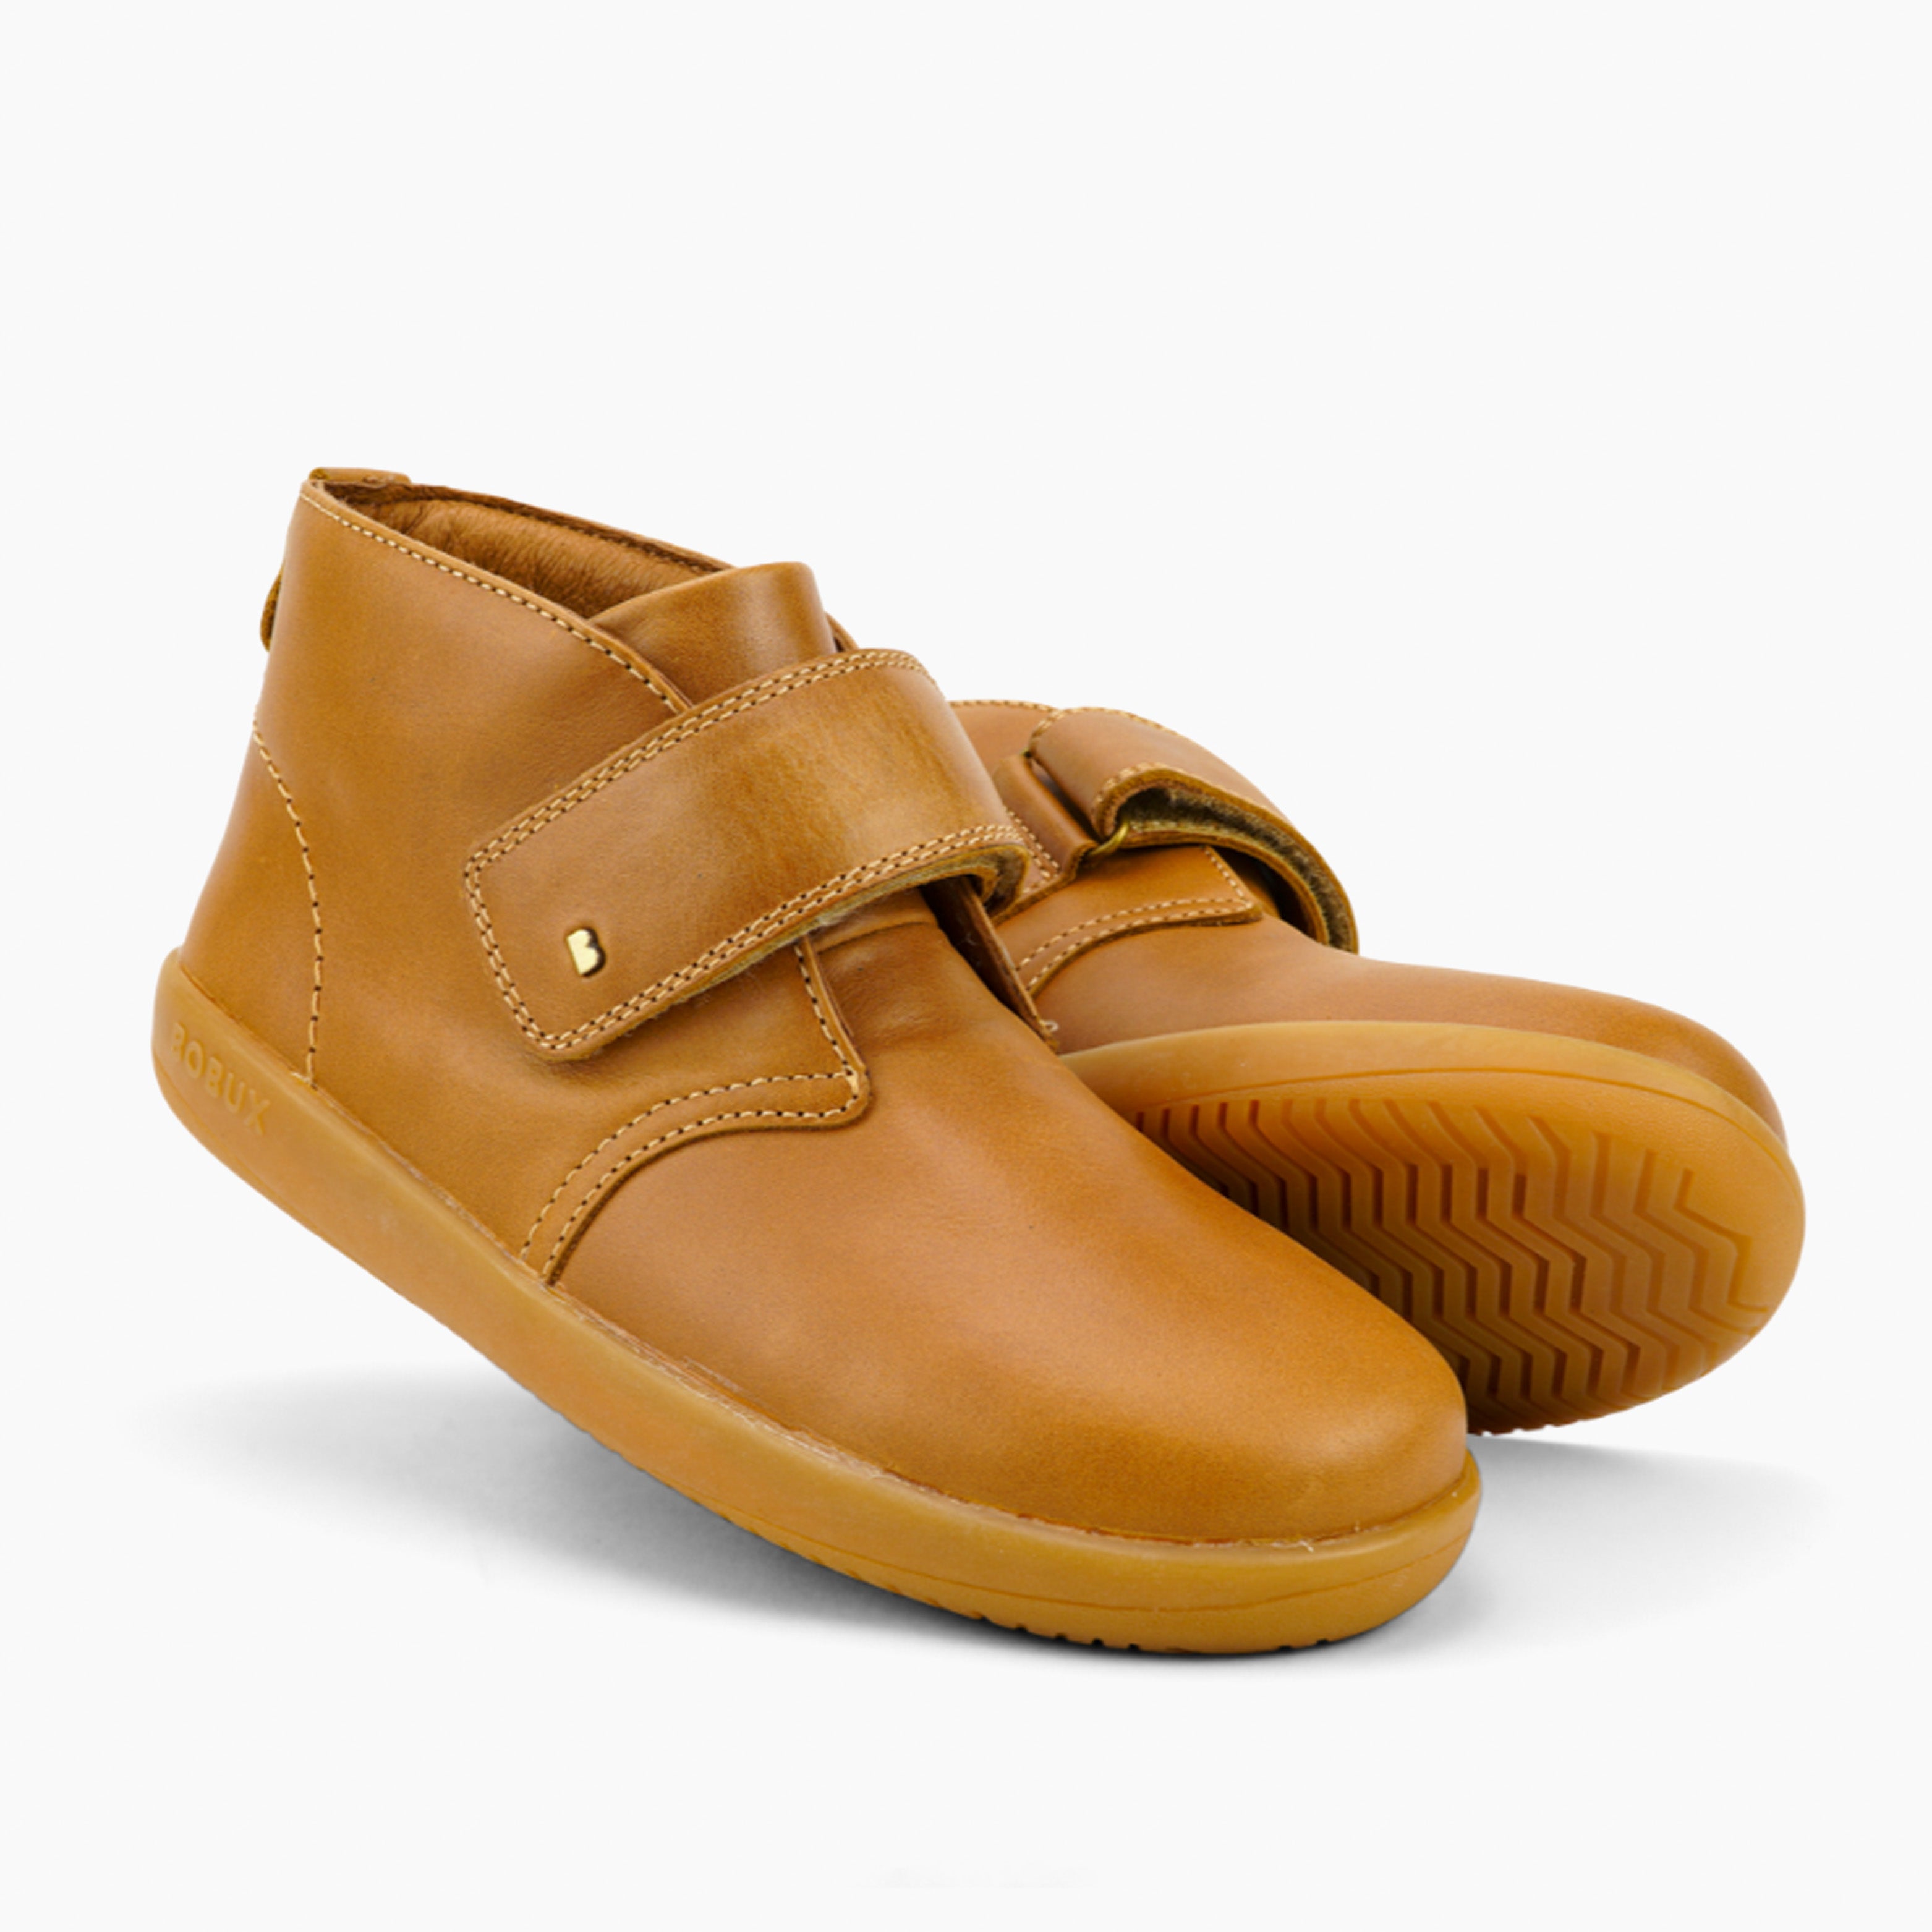 An image of Kids Shoes - Bobux Desert Boots | Small Smart UK EU27/UK9.5